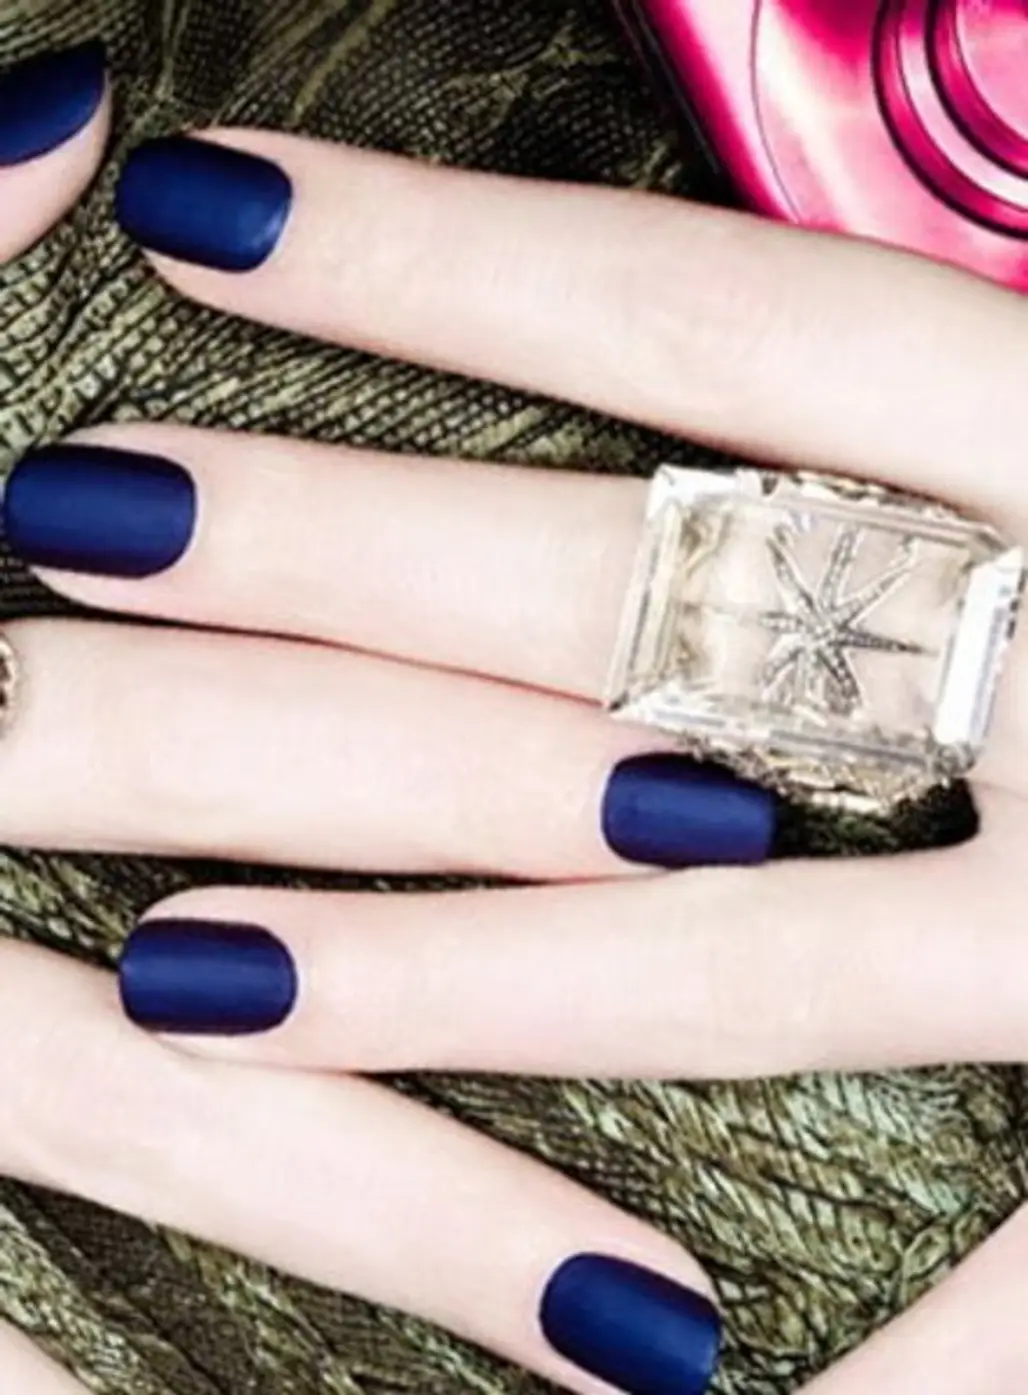 color,nail,finger,blue,nail care,